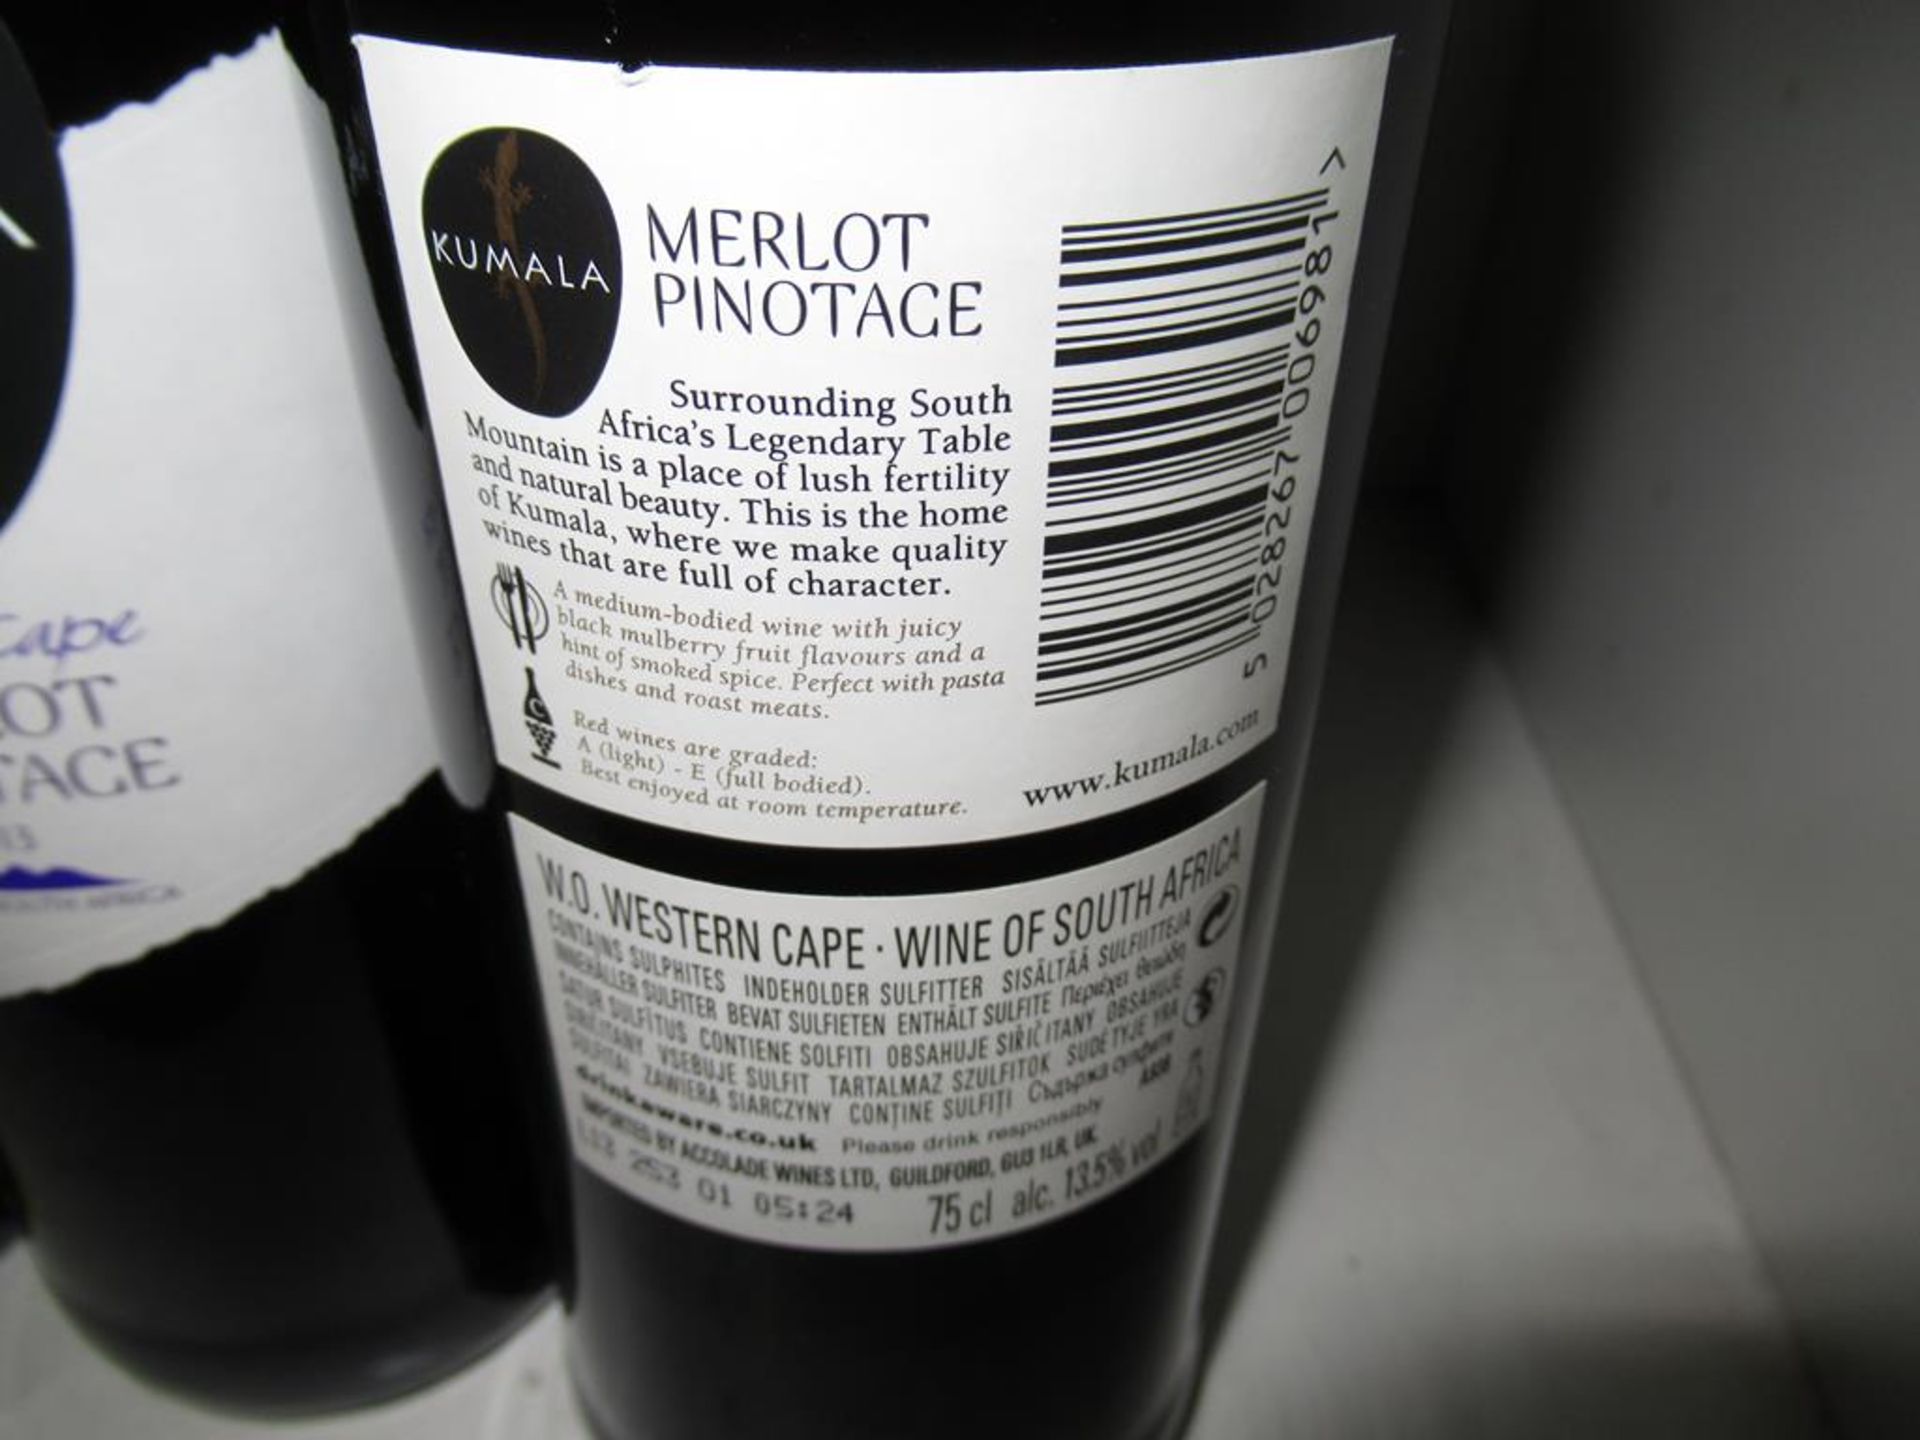 Sixteen bottles of Kumala Western Cape Merlot Pinotage 2013 red wine and four bottles of Kumala Cabe - Image 3 of 5